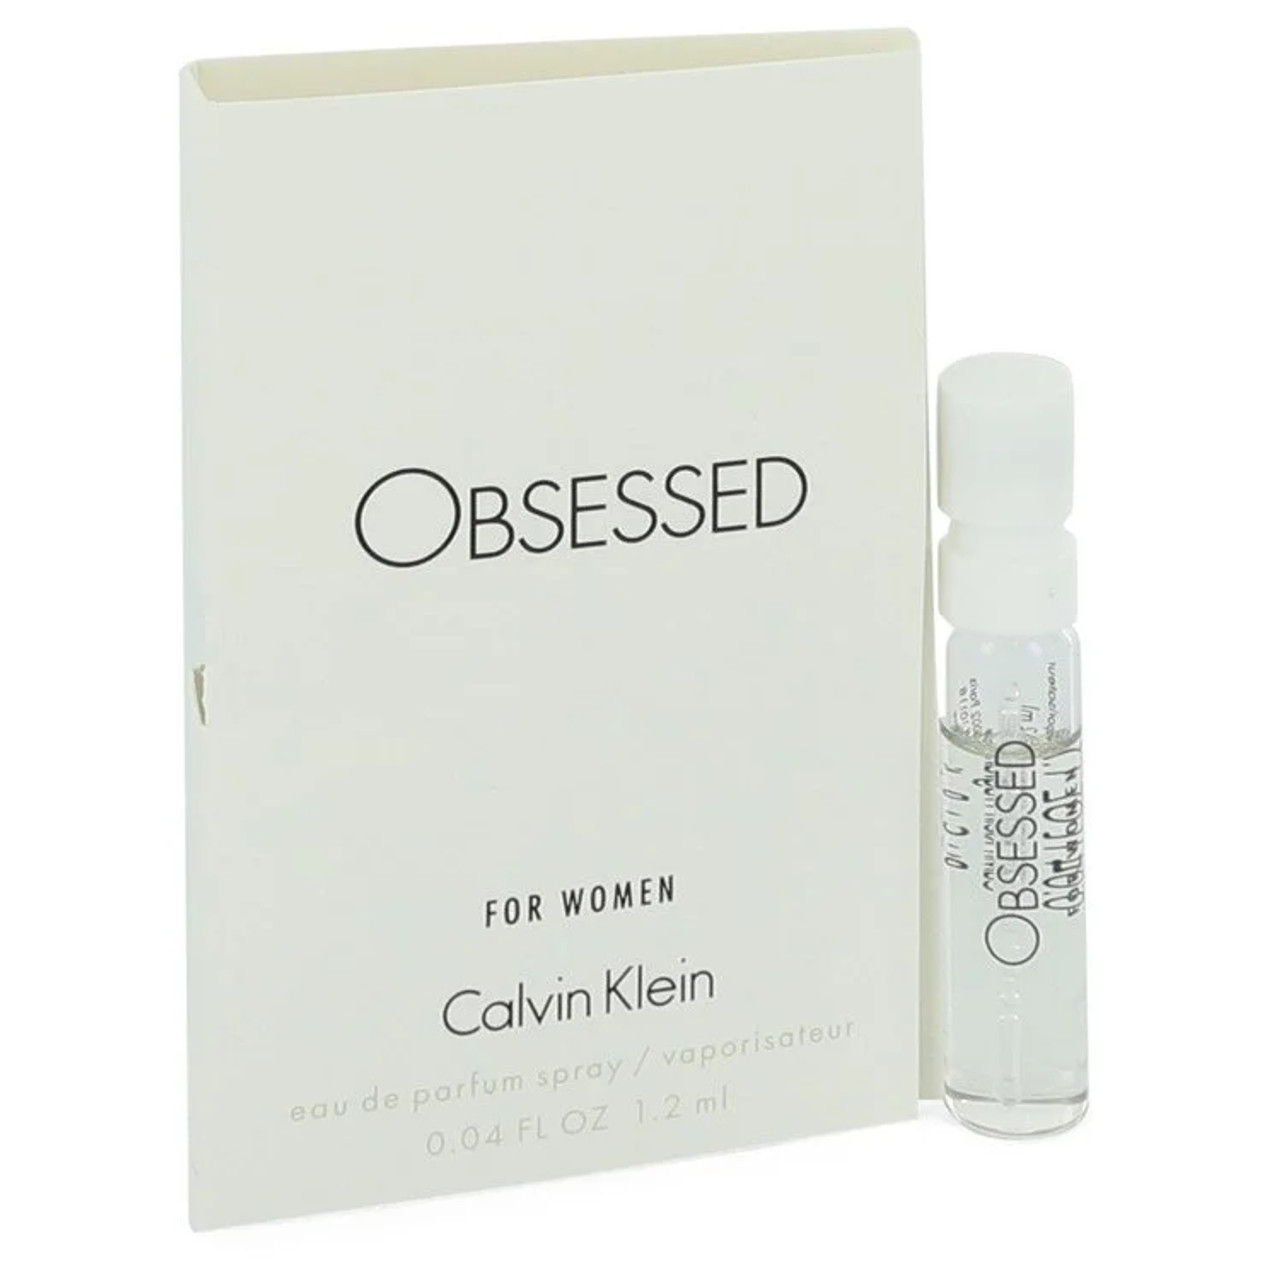 Obsessed Perfume By Calvin Klein Eau De Parfum Vial 0.04 oz for Women - *In Store